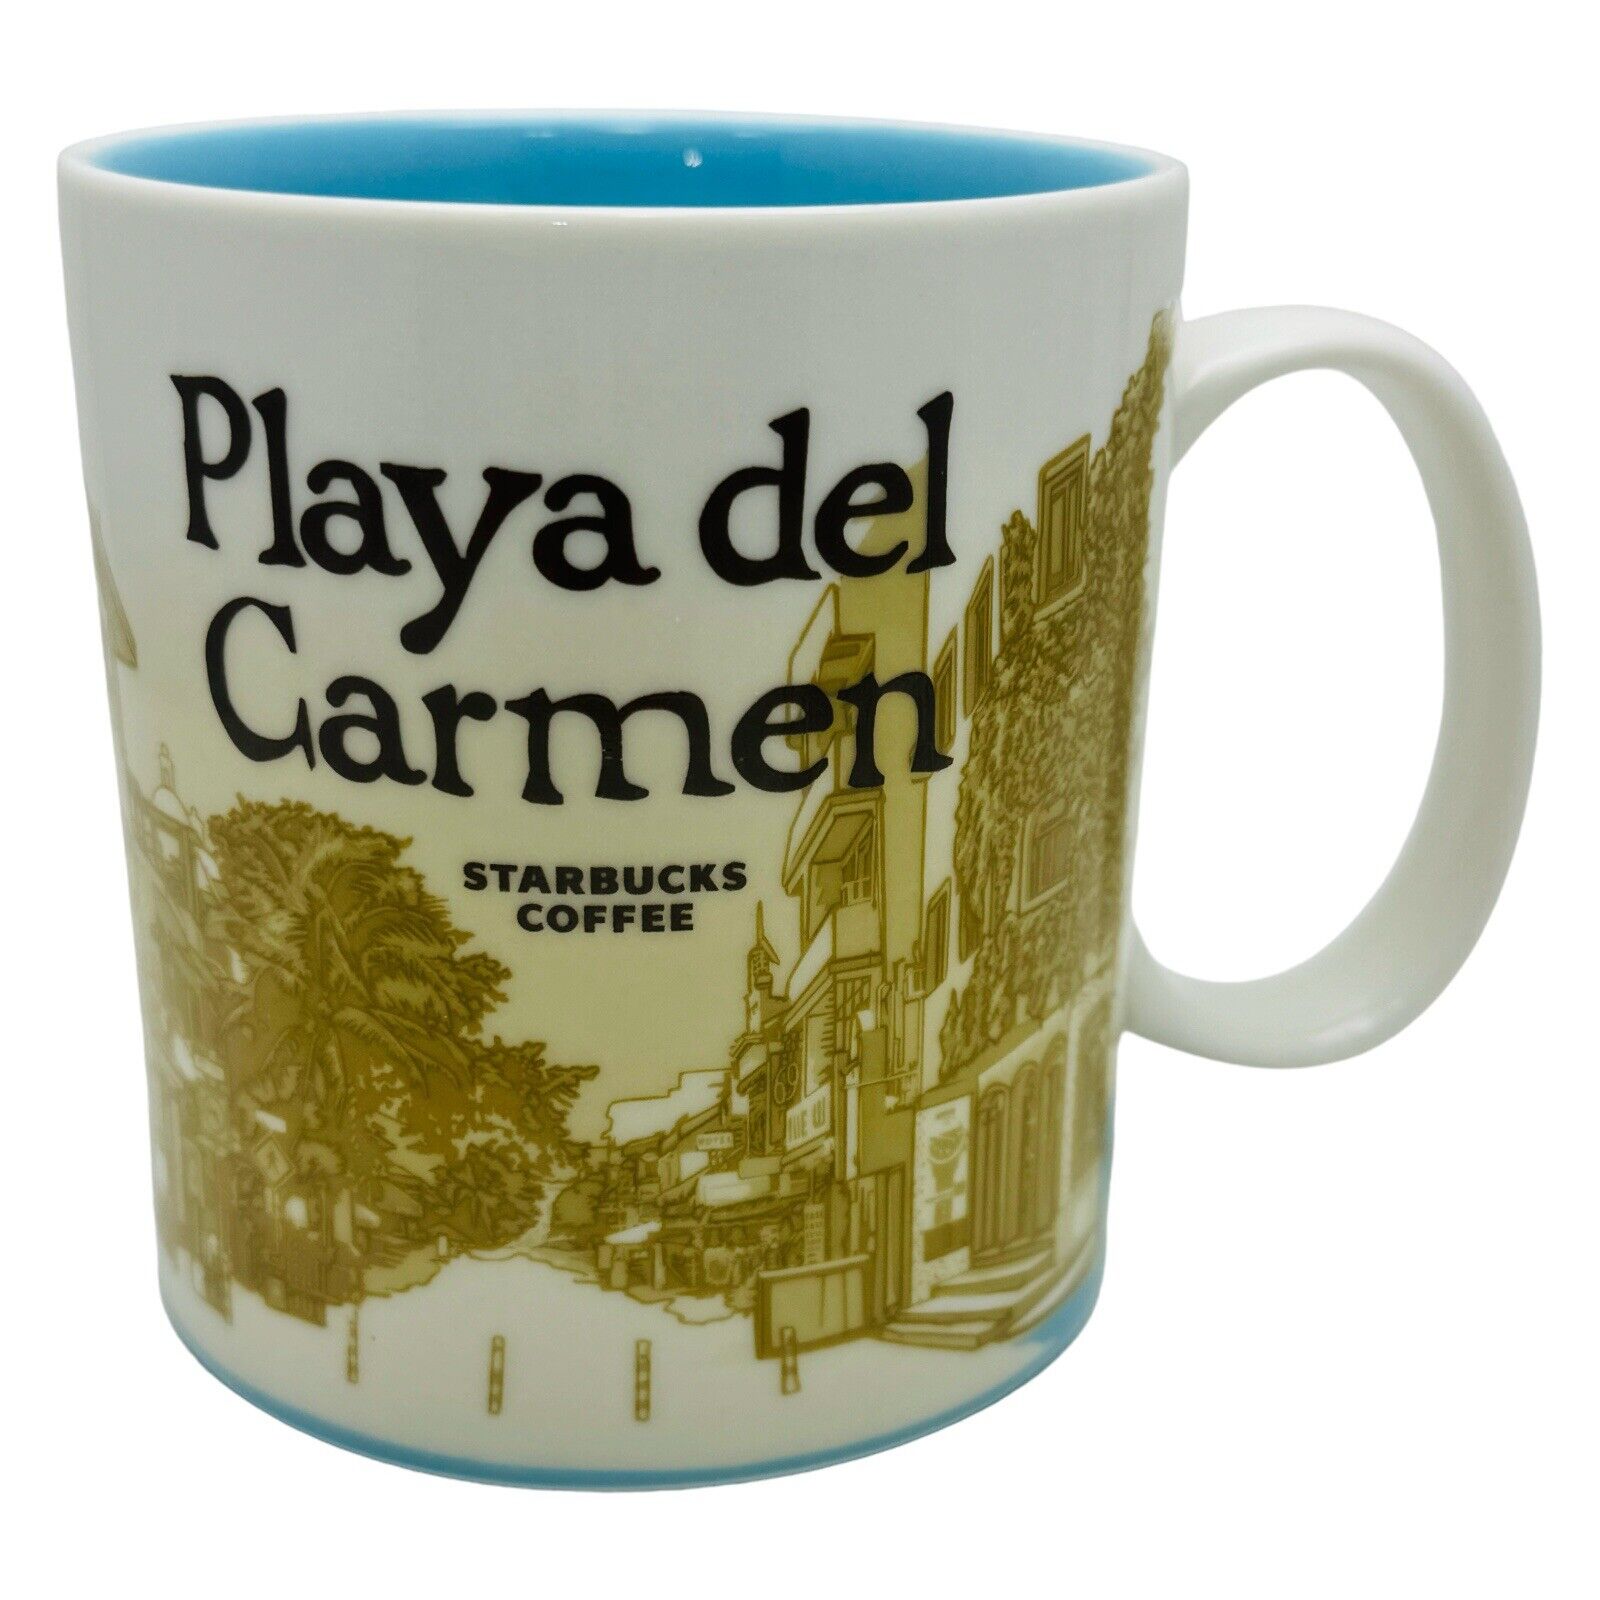 Starbucks Coffee Cup Mug 16oz Playa del Carmen Global City Icon Collector Series